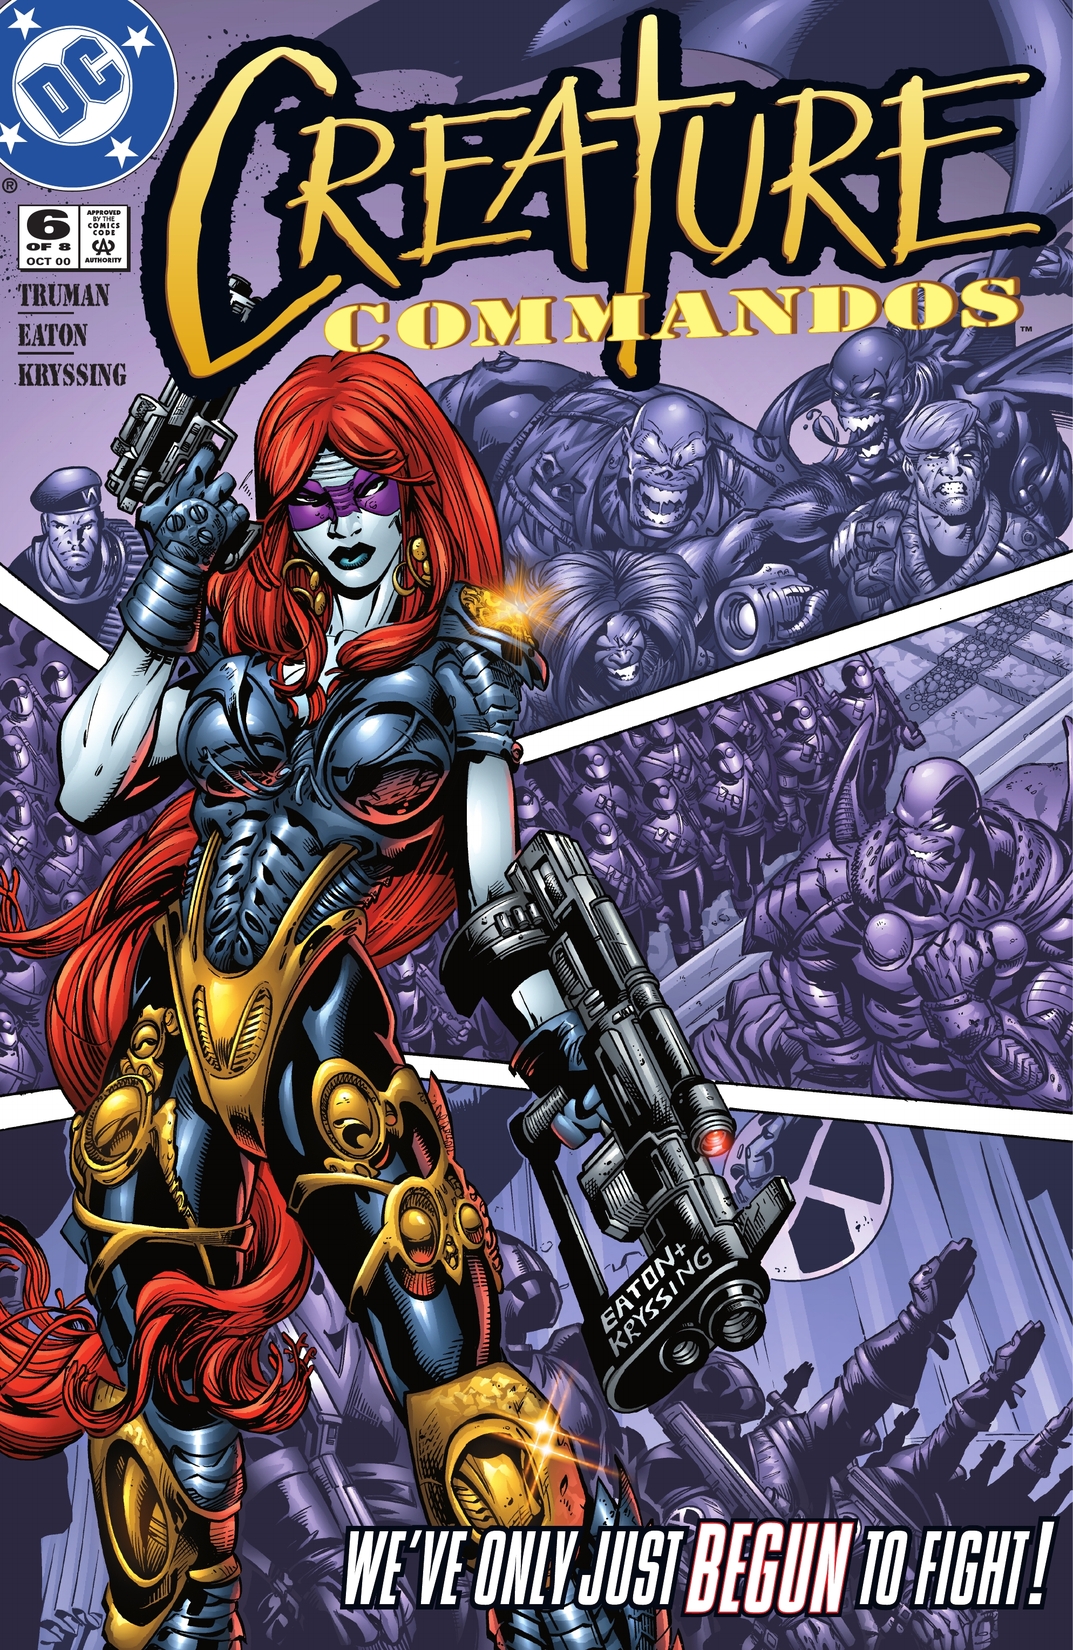 Creature Commandos #6 preview images